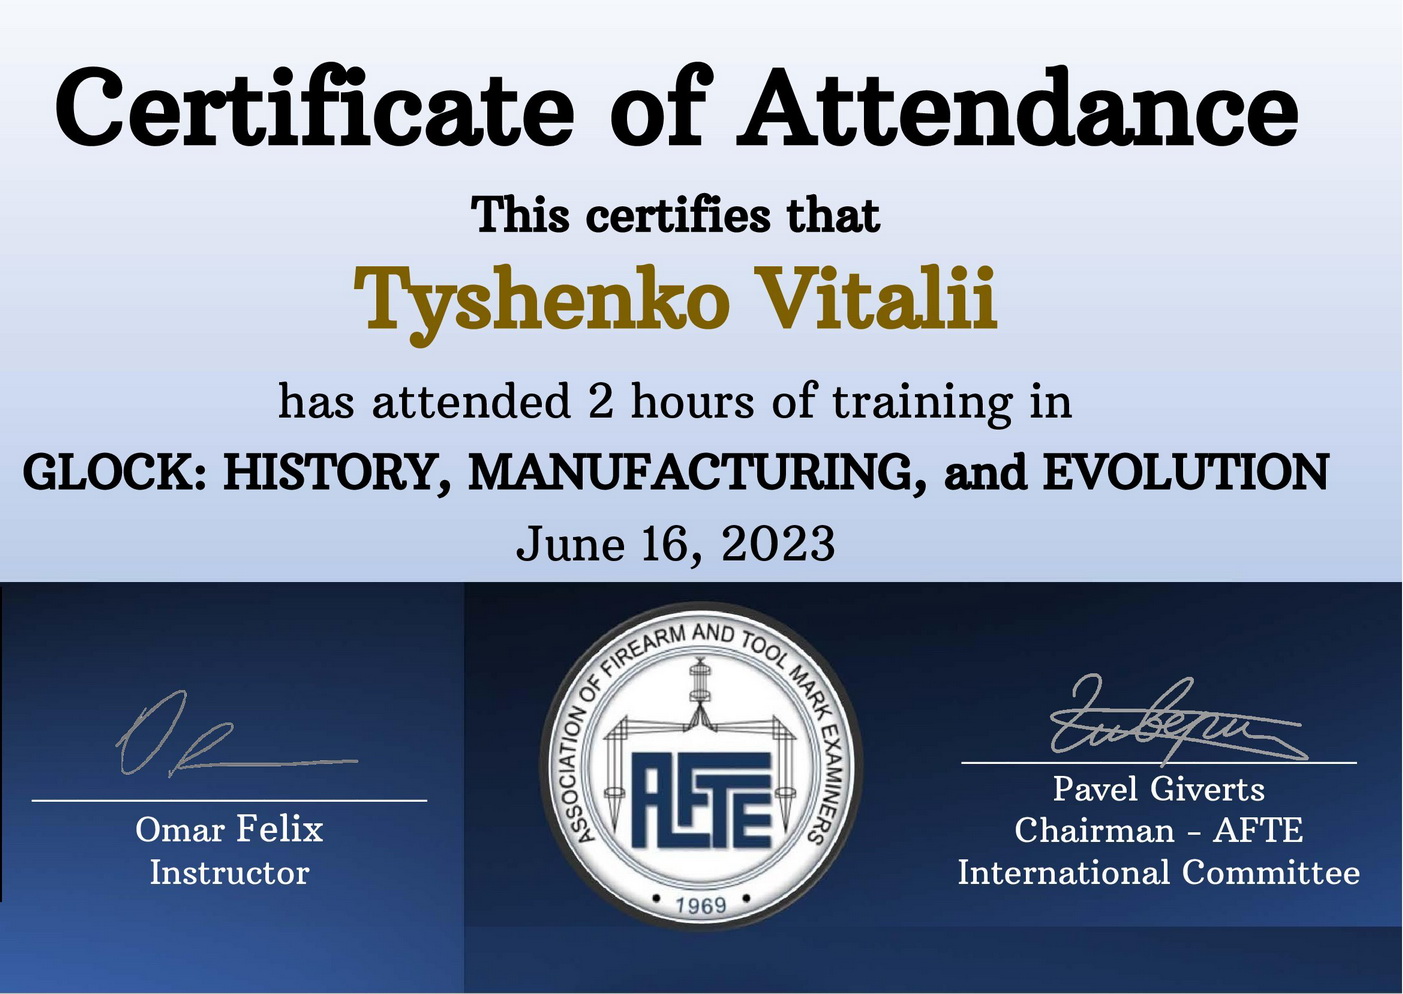 Glock webinar Certificate Tyshenko Vitalii 1